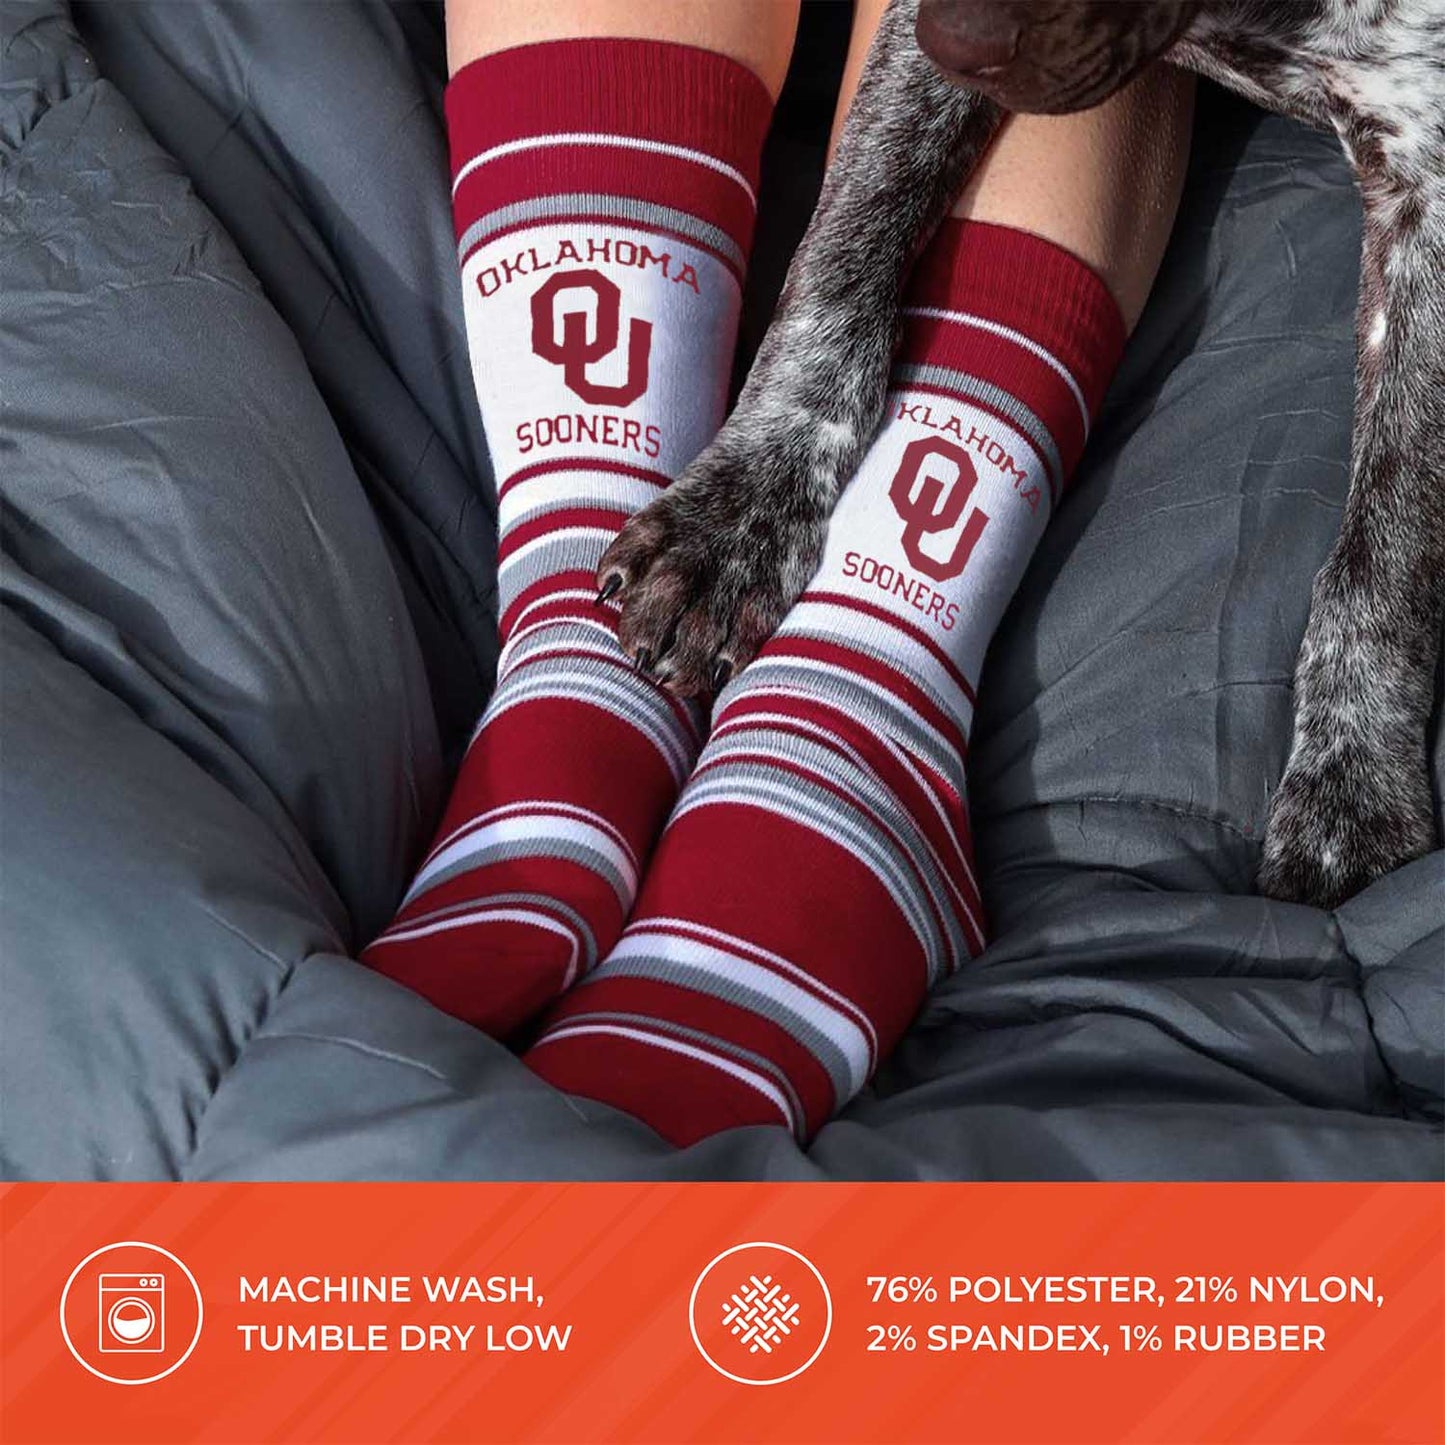 Oklahoma Sooners Collegiate University Striped Dress Socks - Maroon